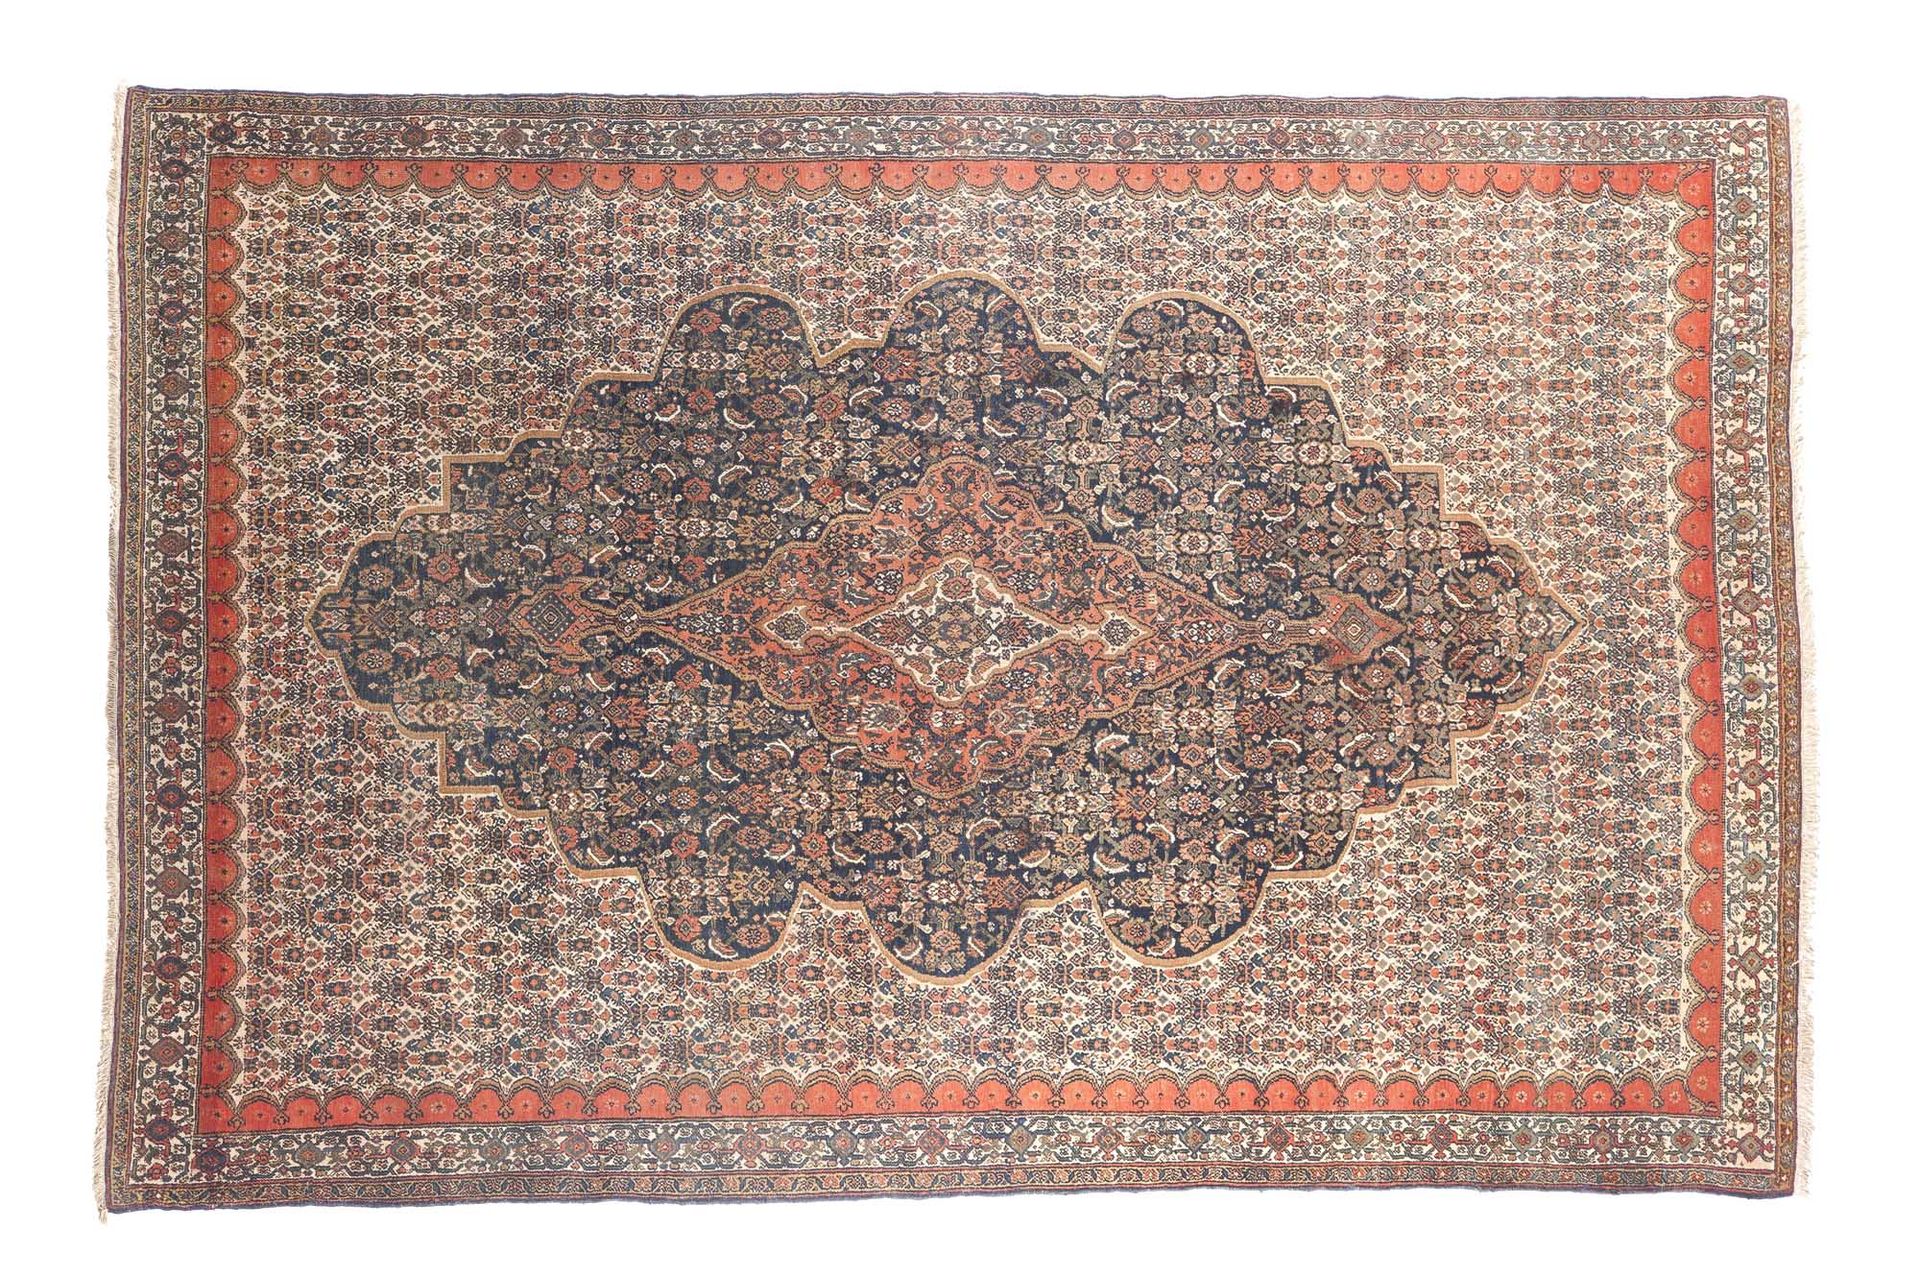 Null SENNEH carpet (Persia), early 20th century

Dimensions : 195 x 136cm

Techn&hellip;